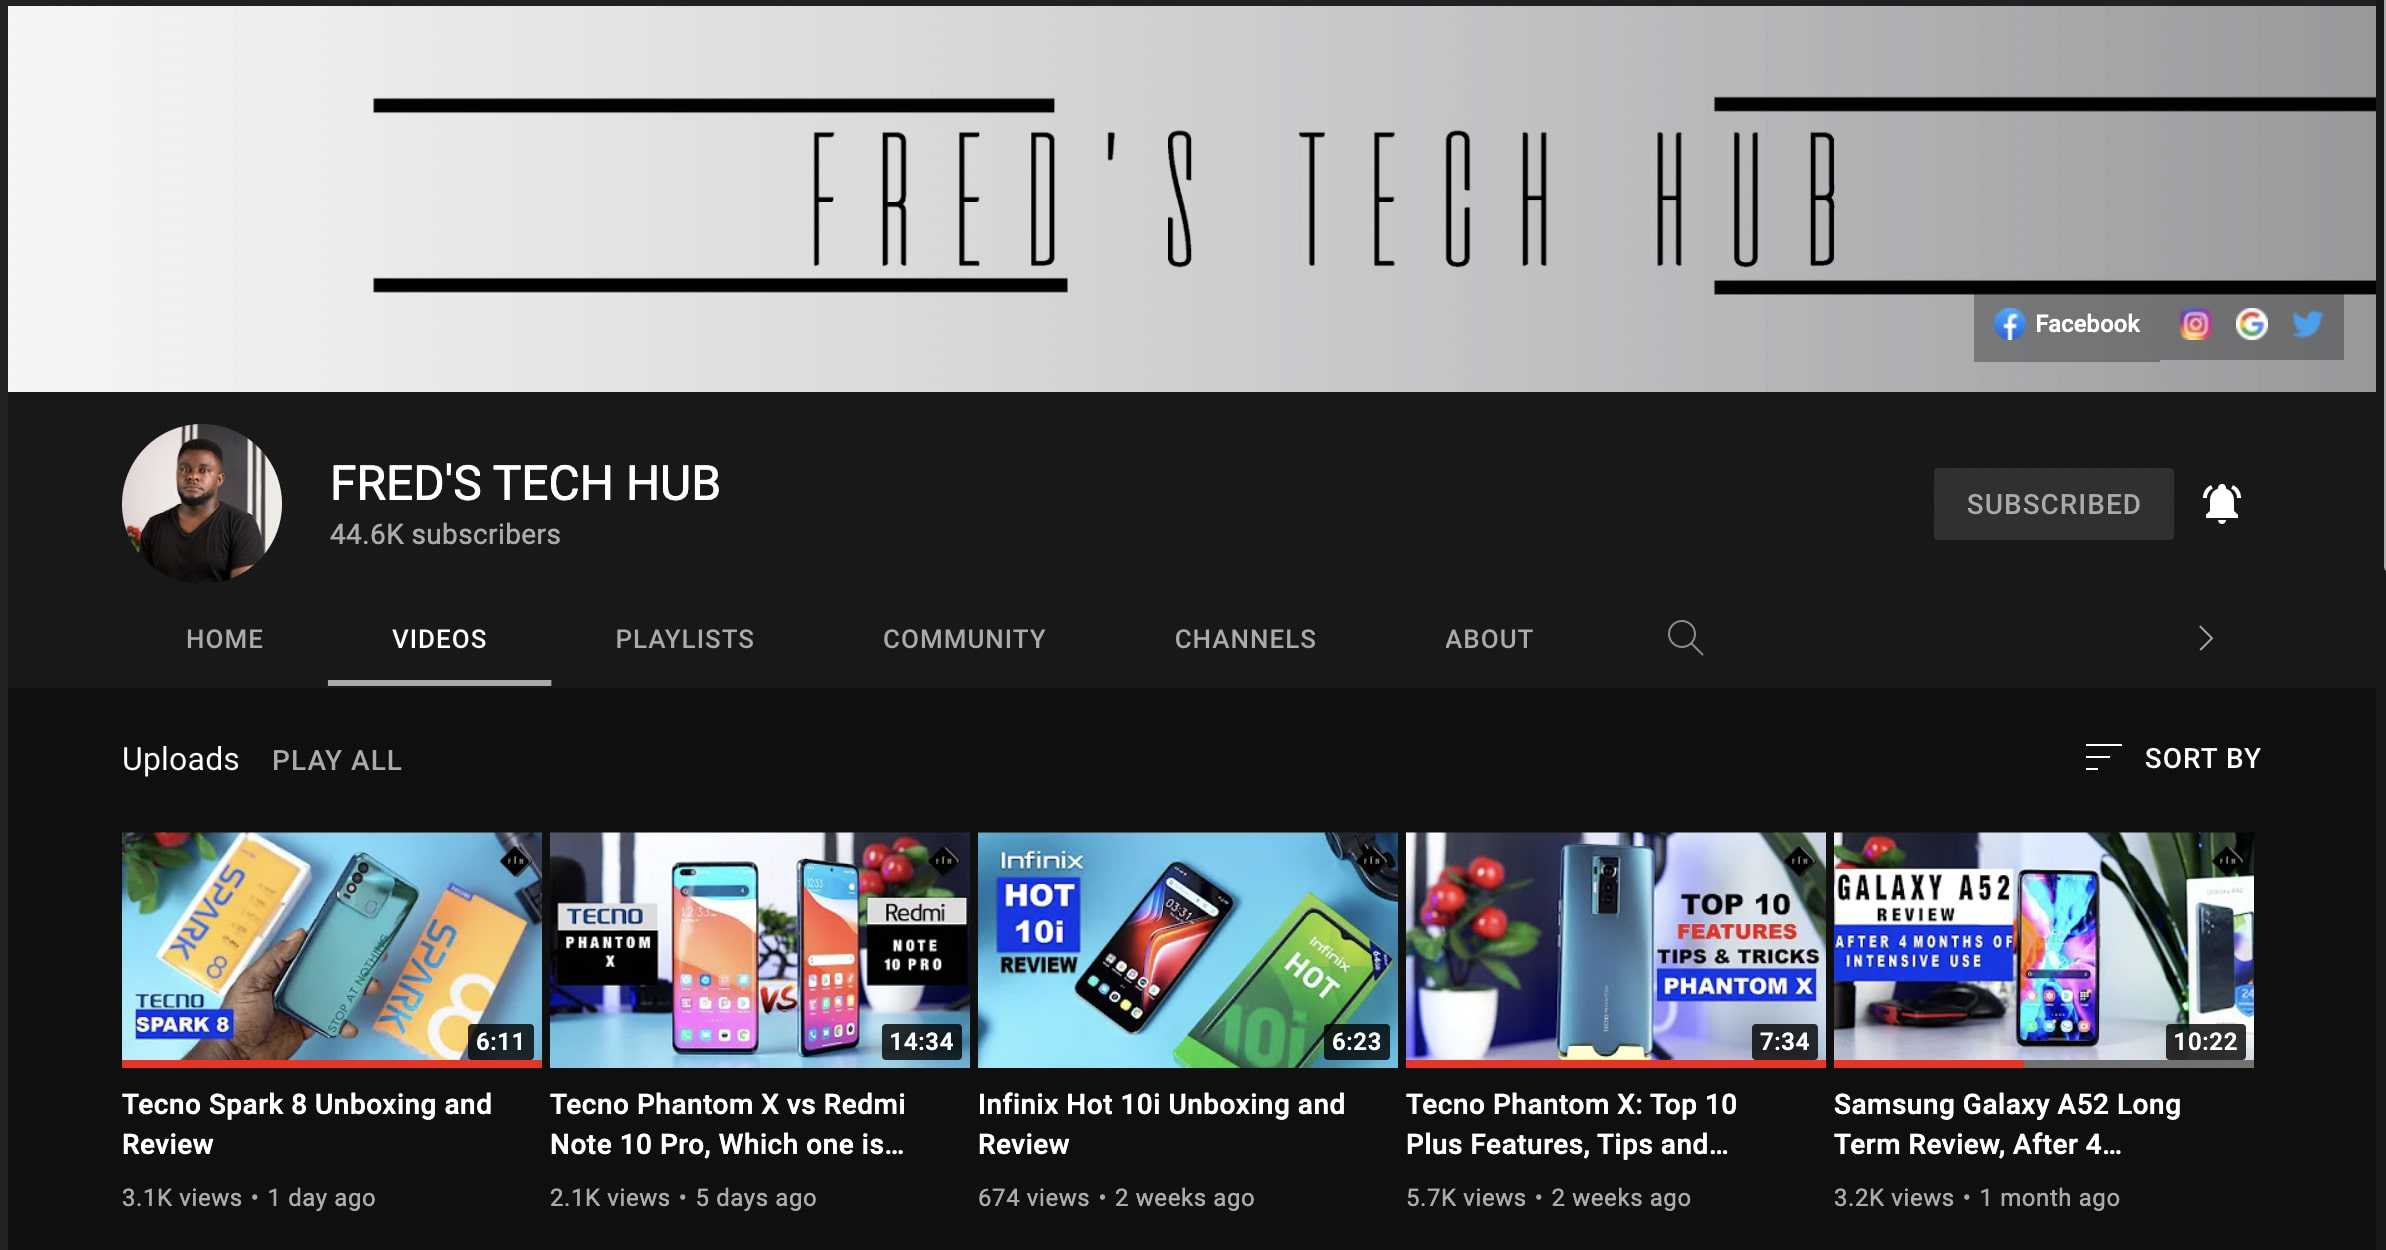 Fred's Tech Hub